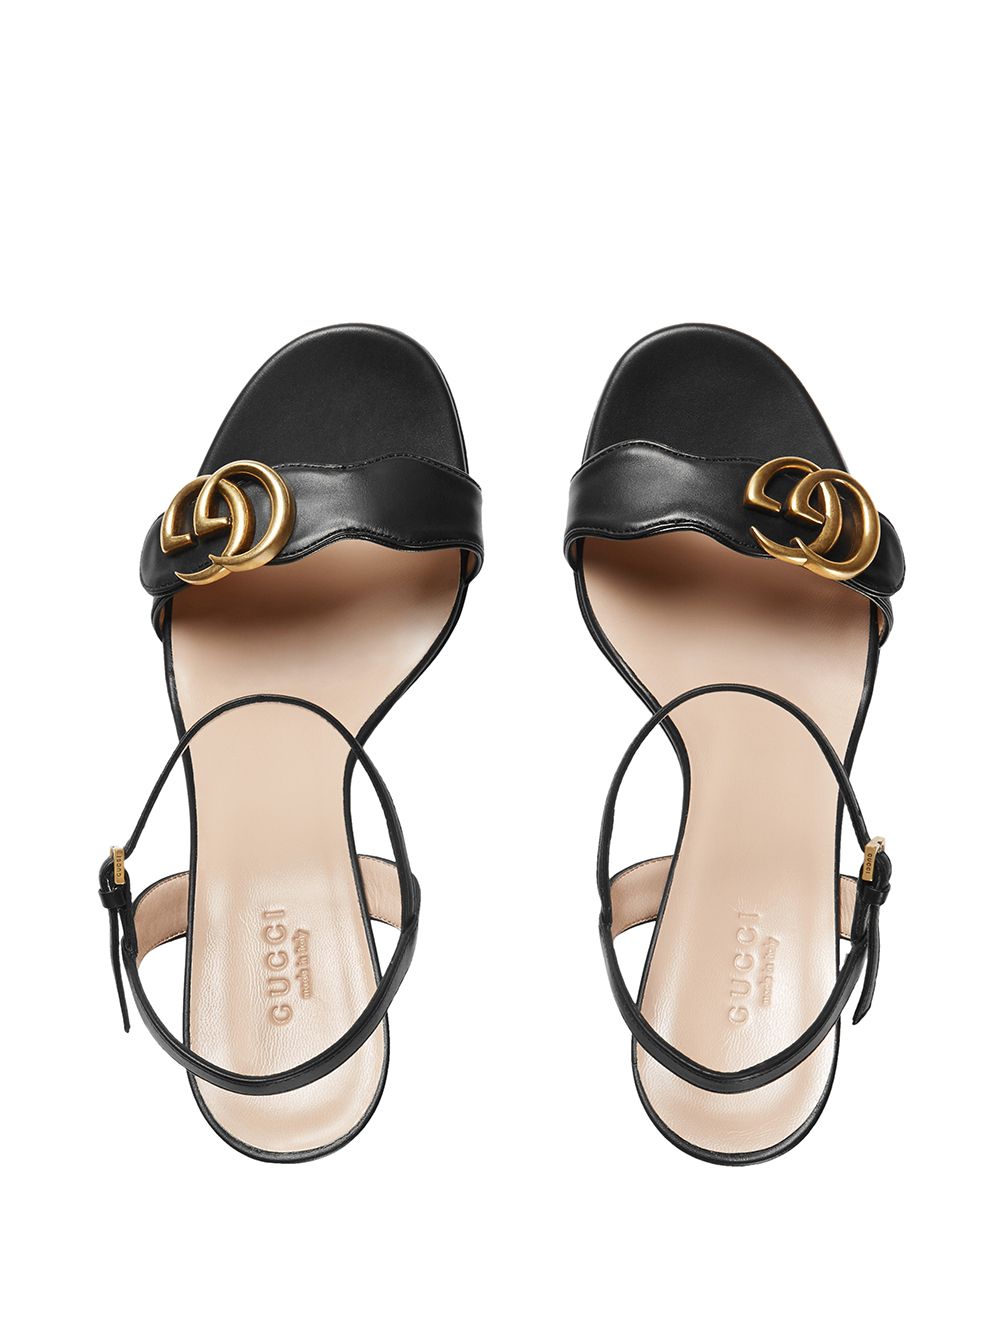 gucci embellished leather sandals